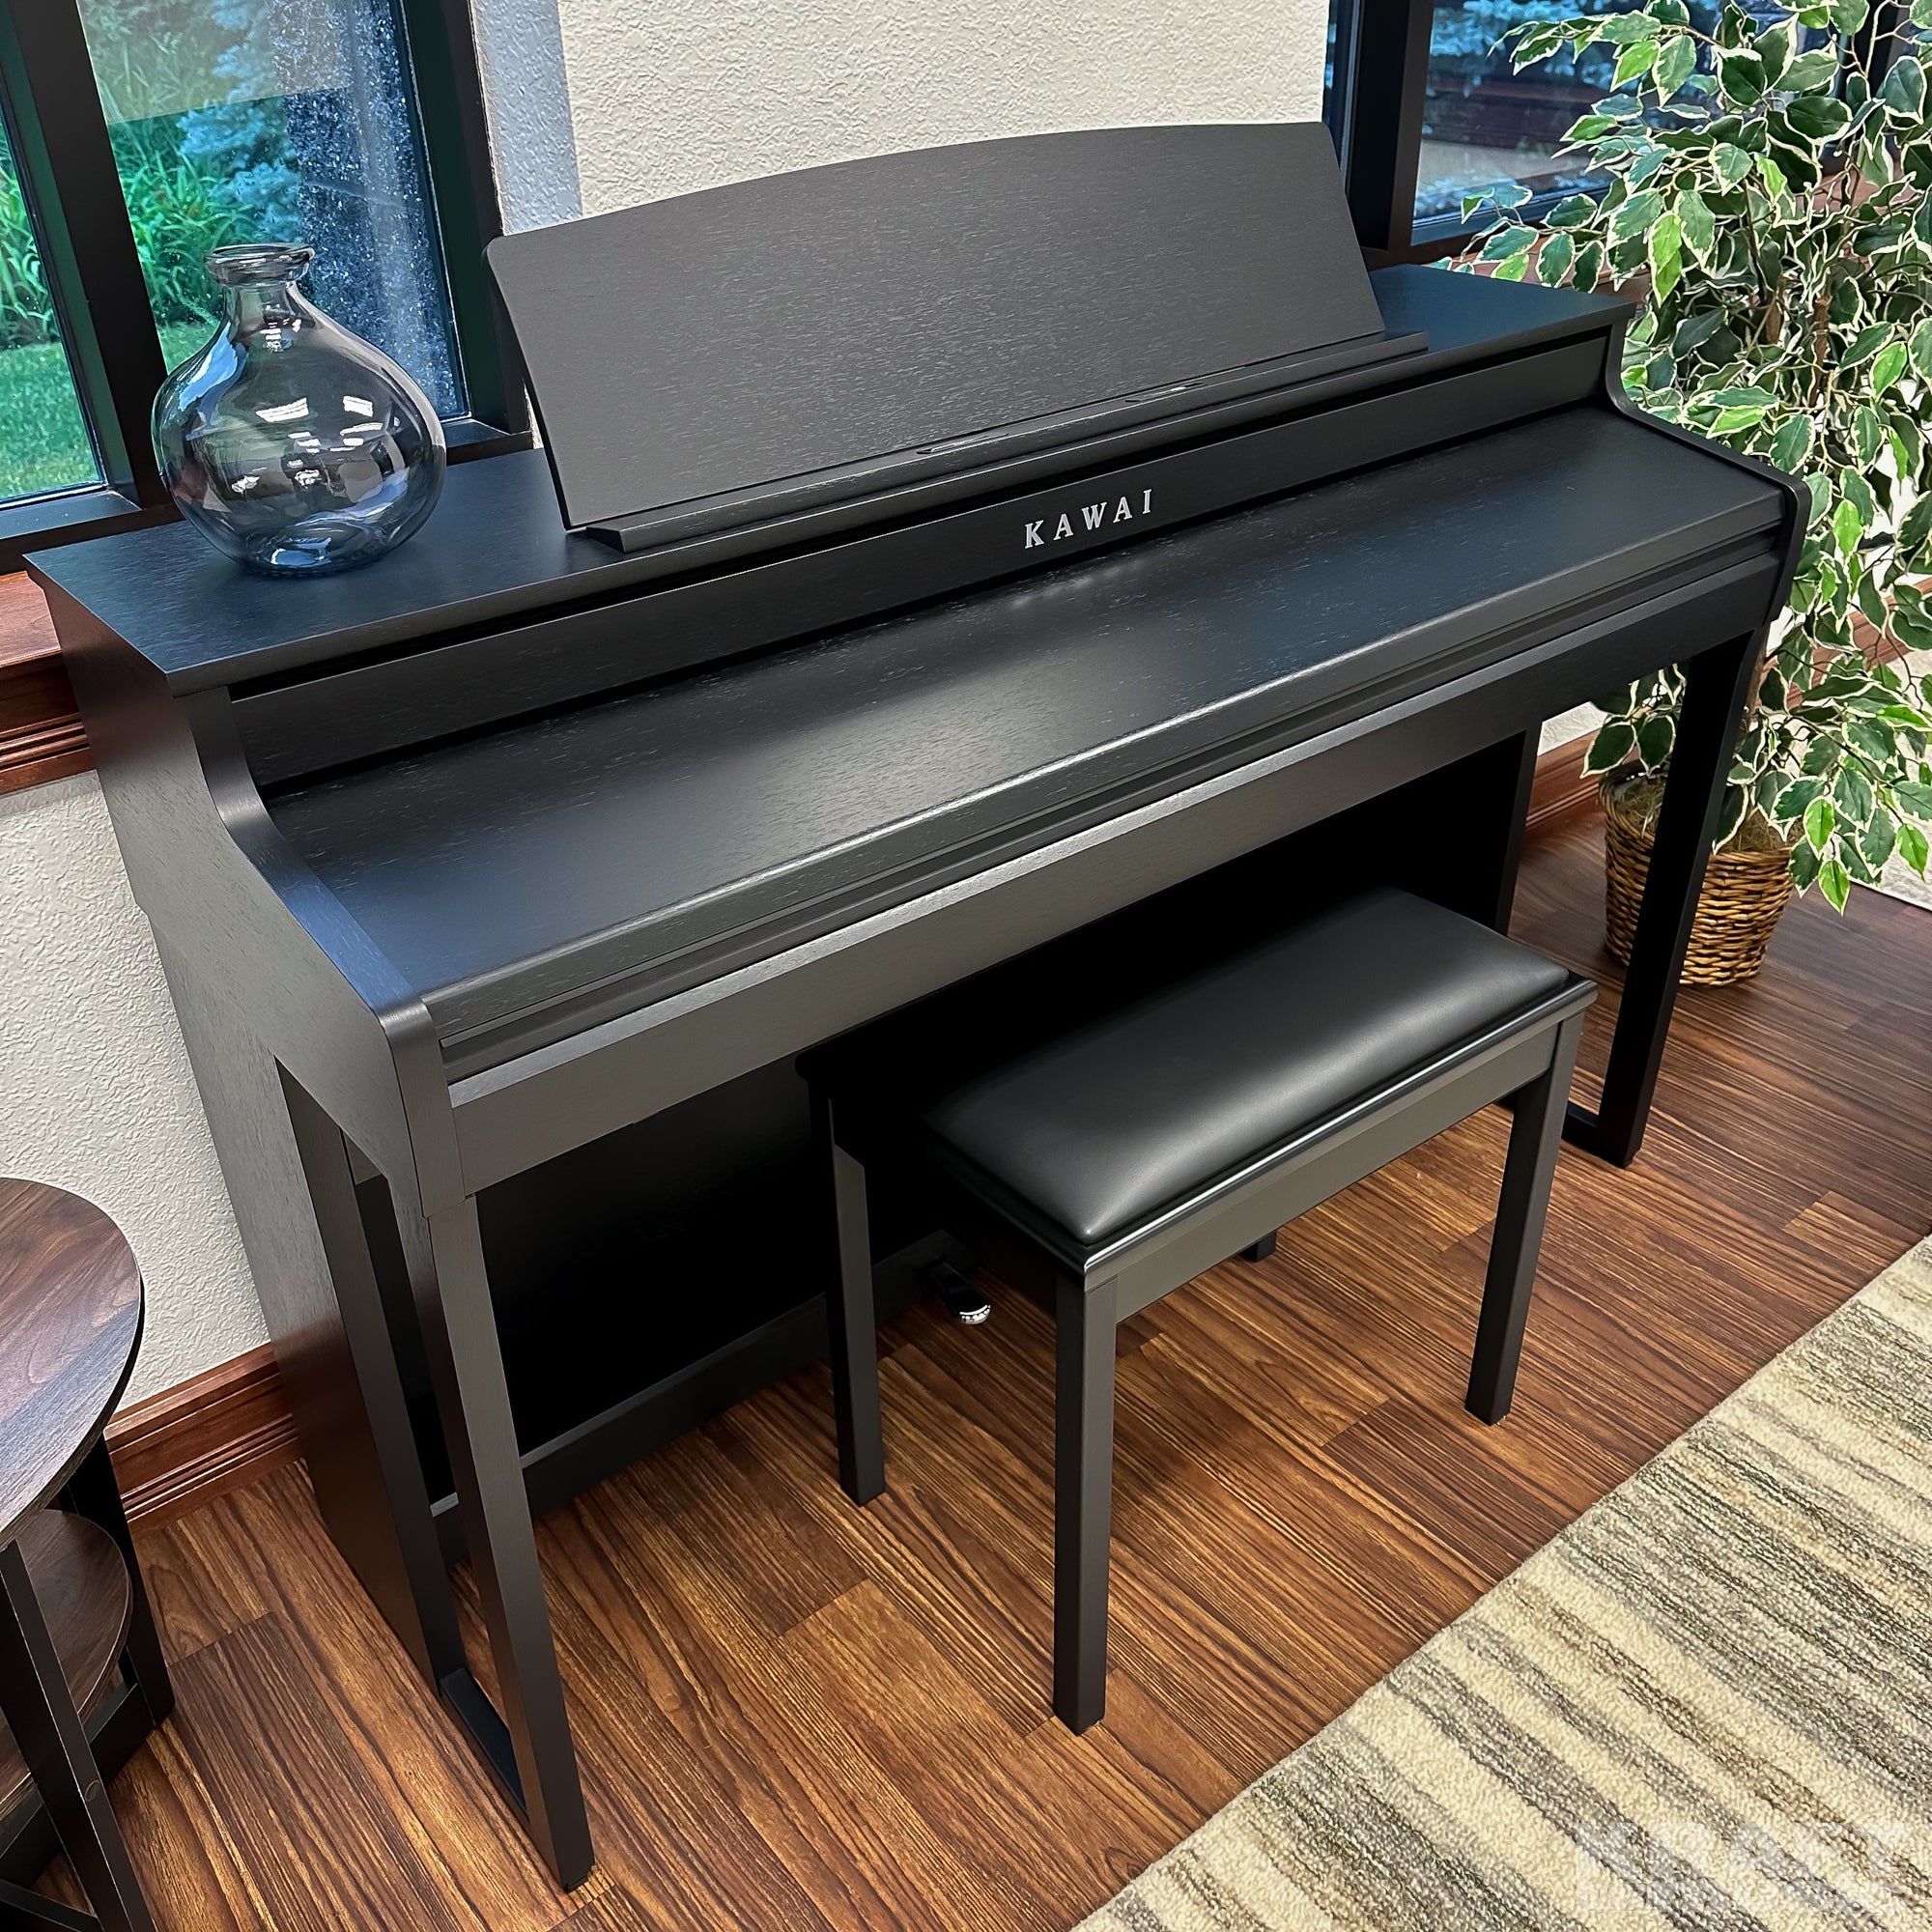 Kawai CA401 Concert Artist Digital Piano - Satin Black - Keyboard cover closed in a stylish living room